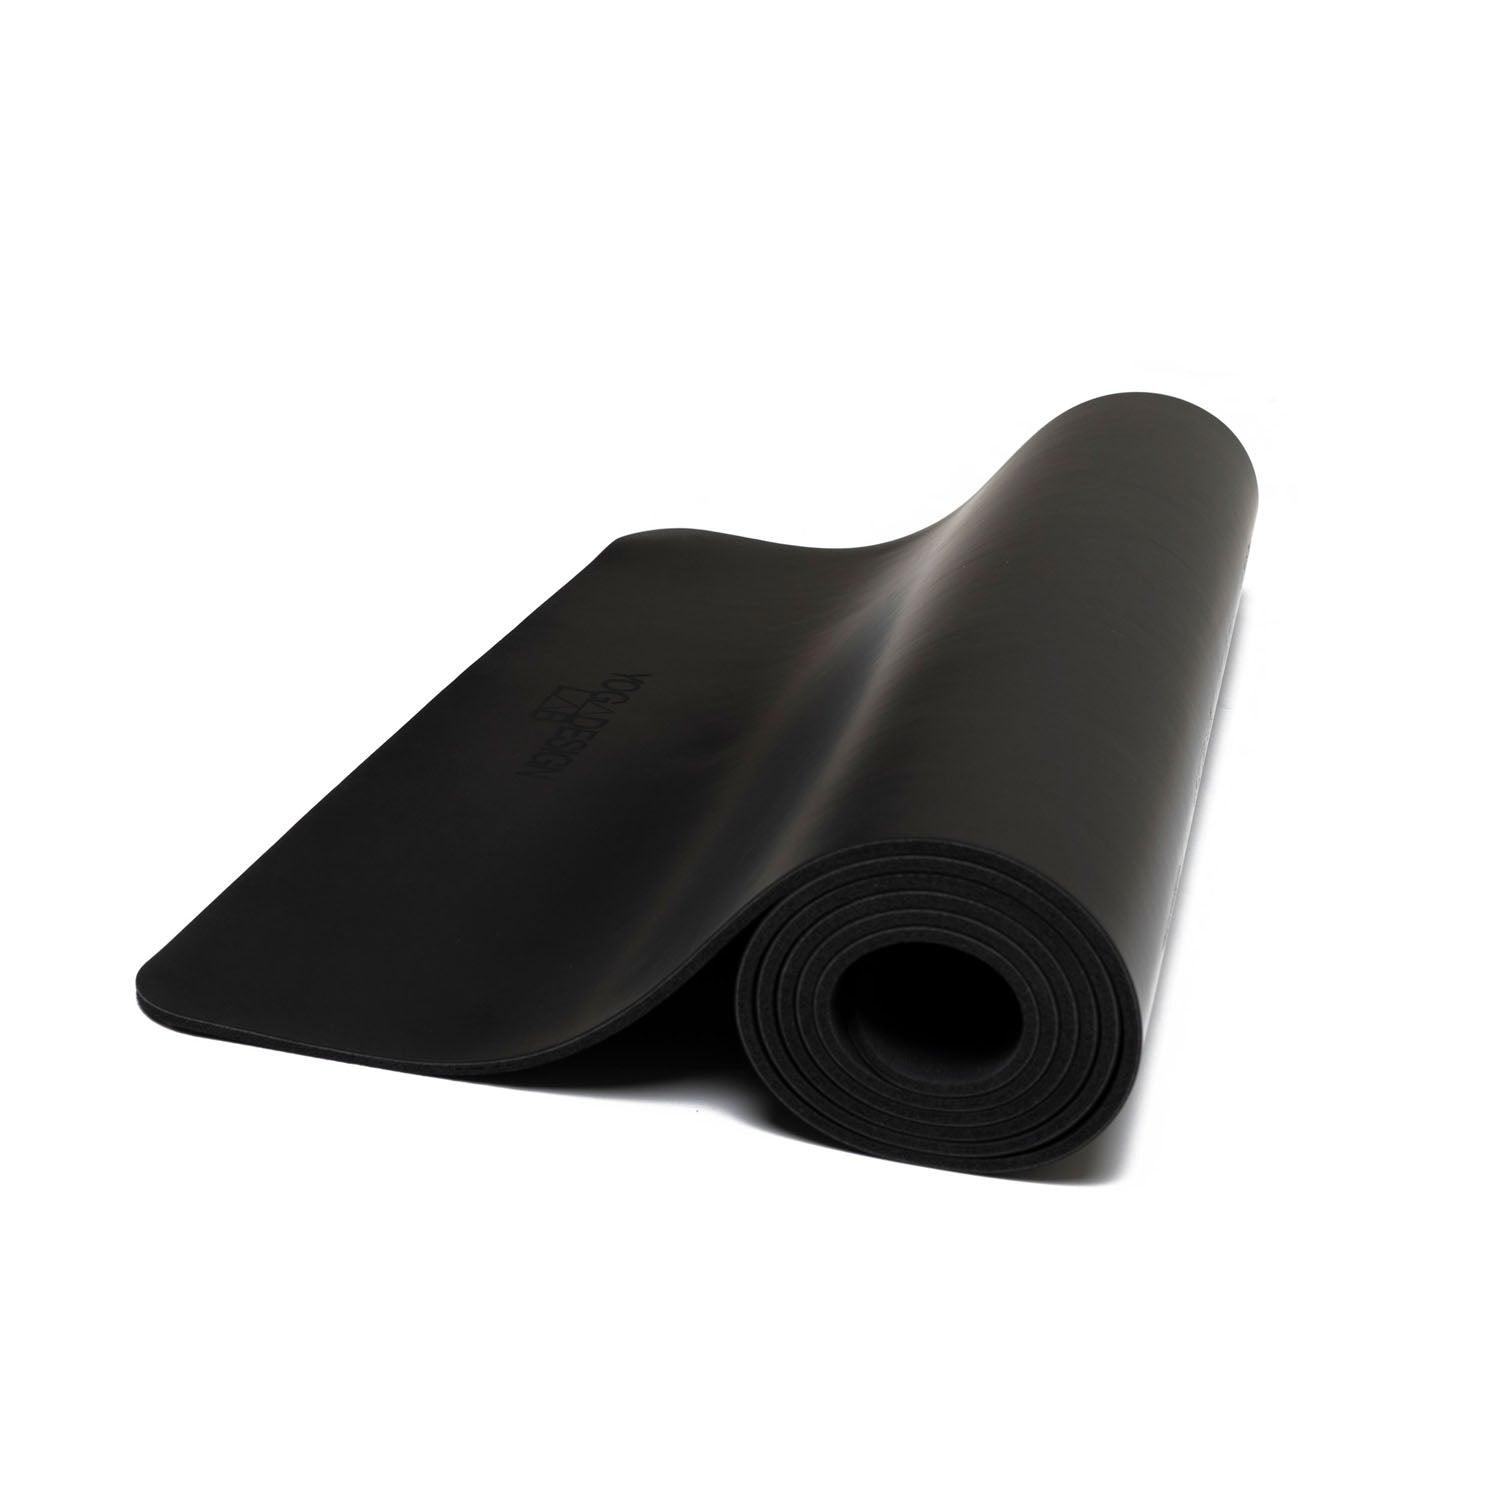 Infinity Yoga Mat - 5mm - Black/Night - Anti-Slip Mat for Poses & Grip